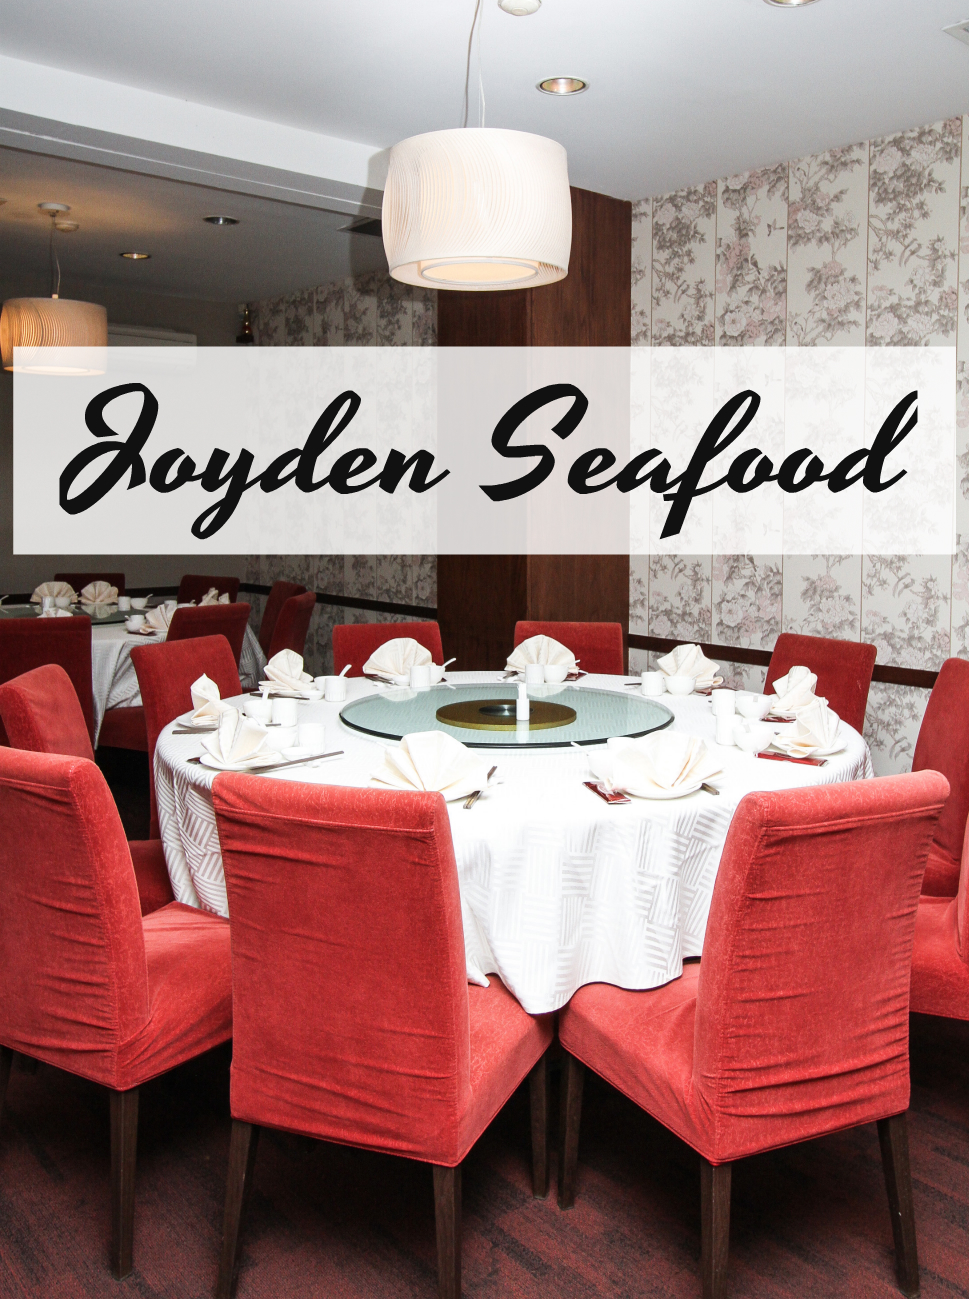 Joyden Seafood